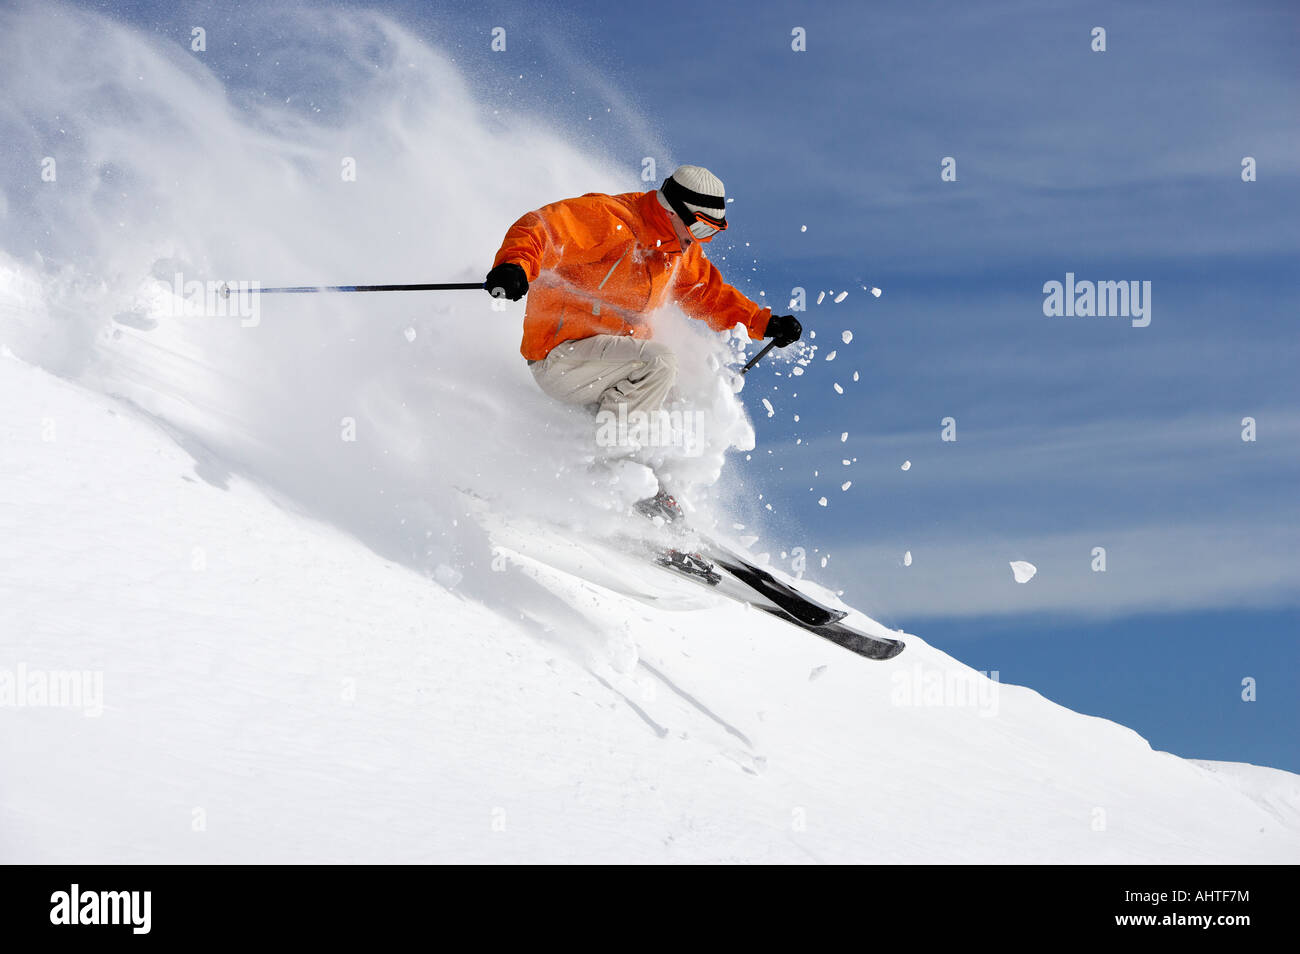 Austria, Saalbach, male skier jumping on slope Stock Photo